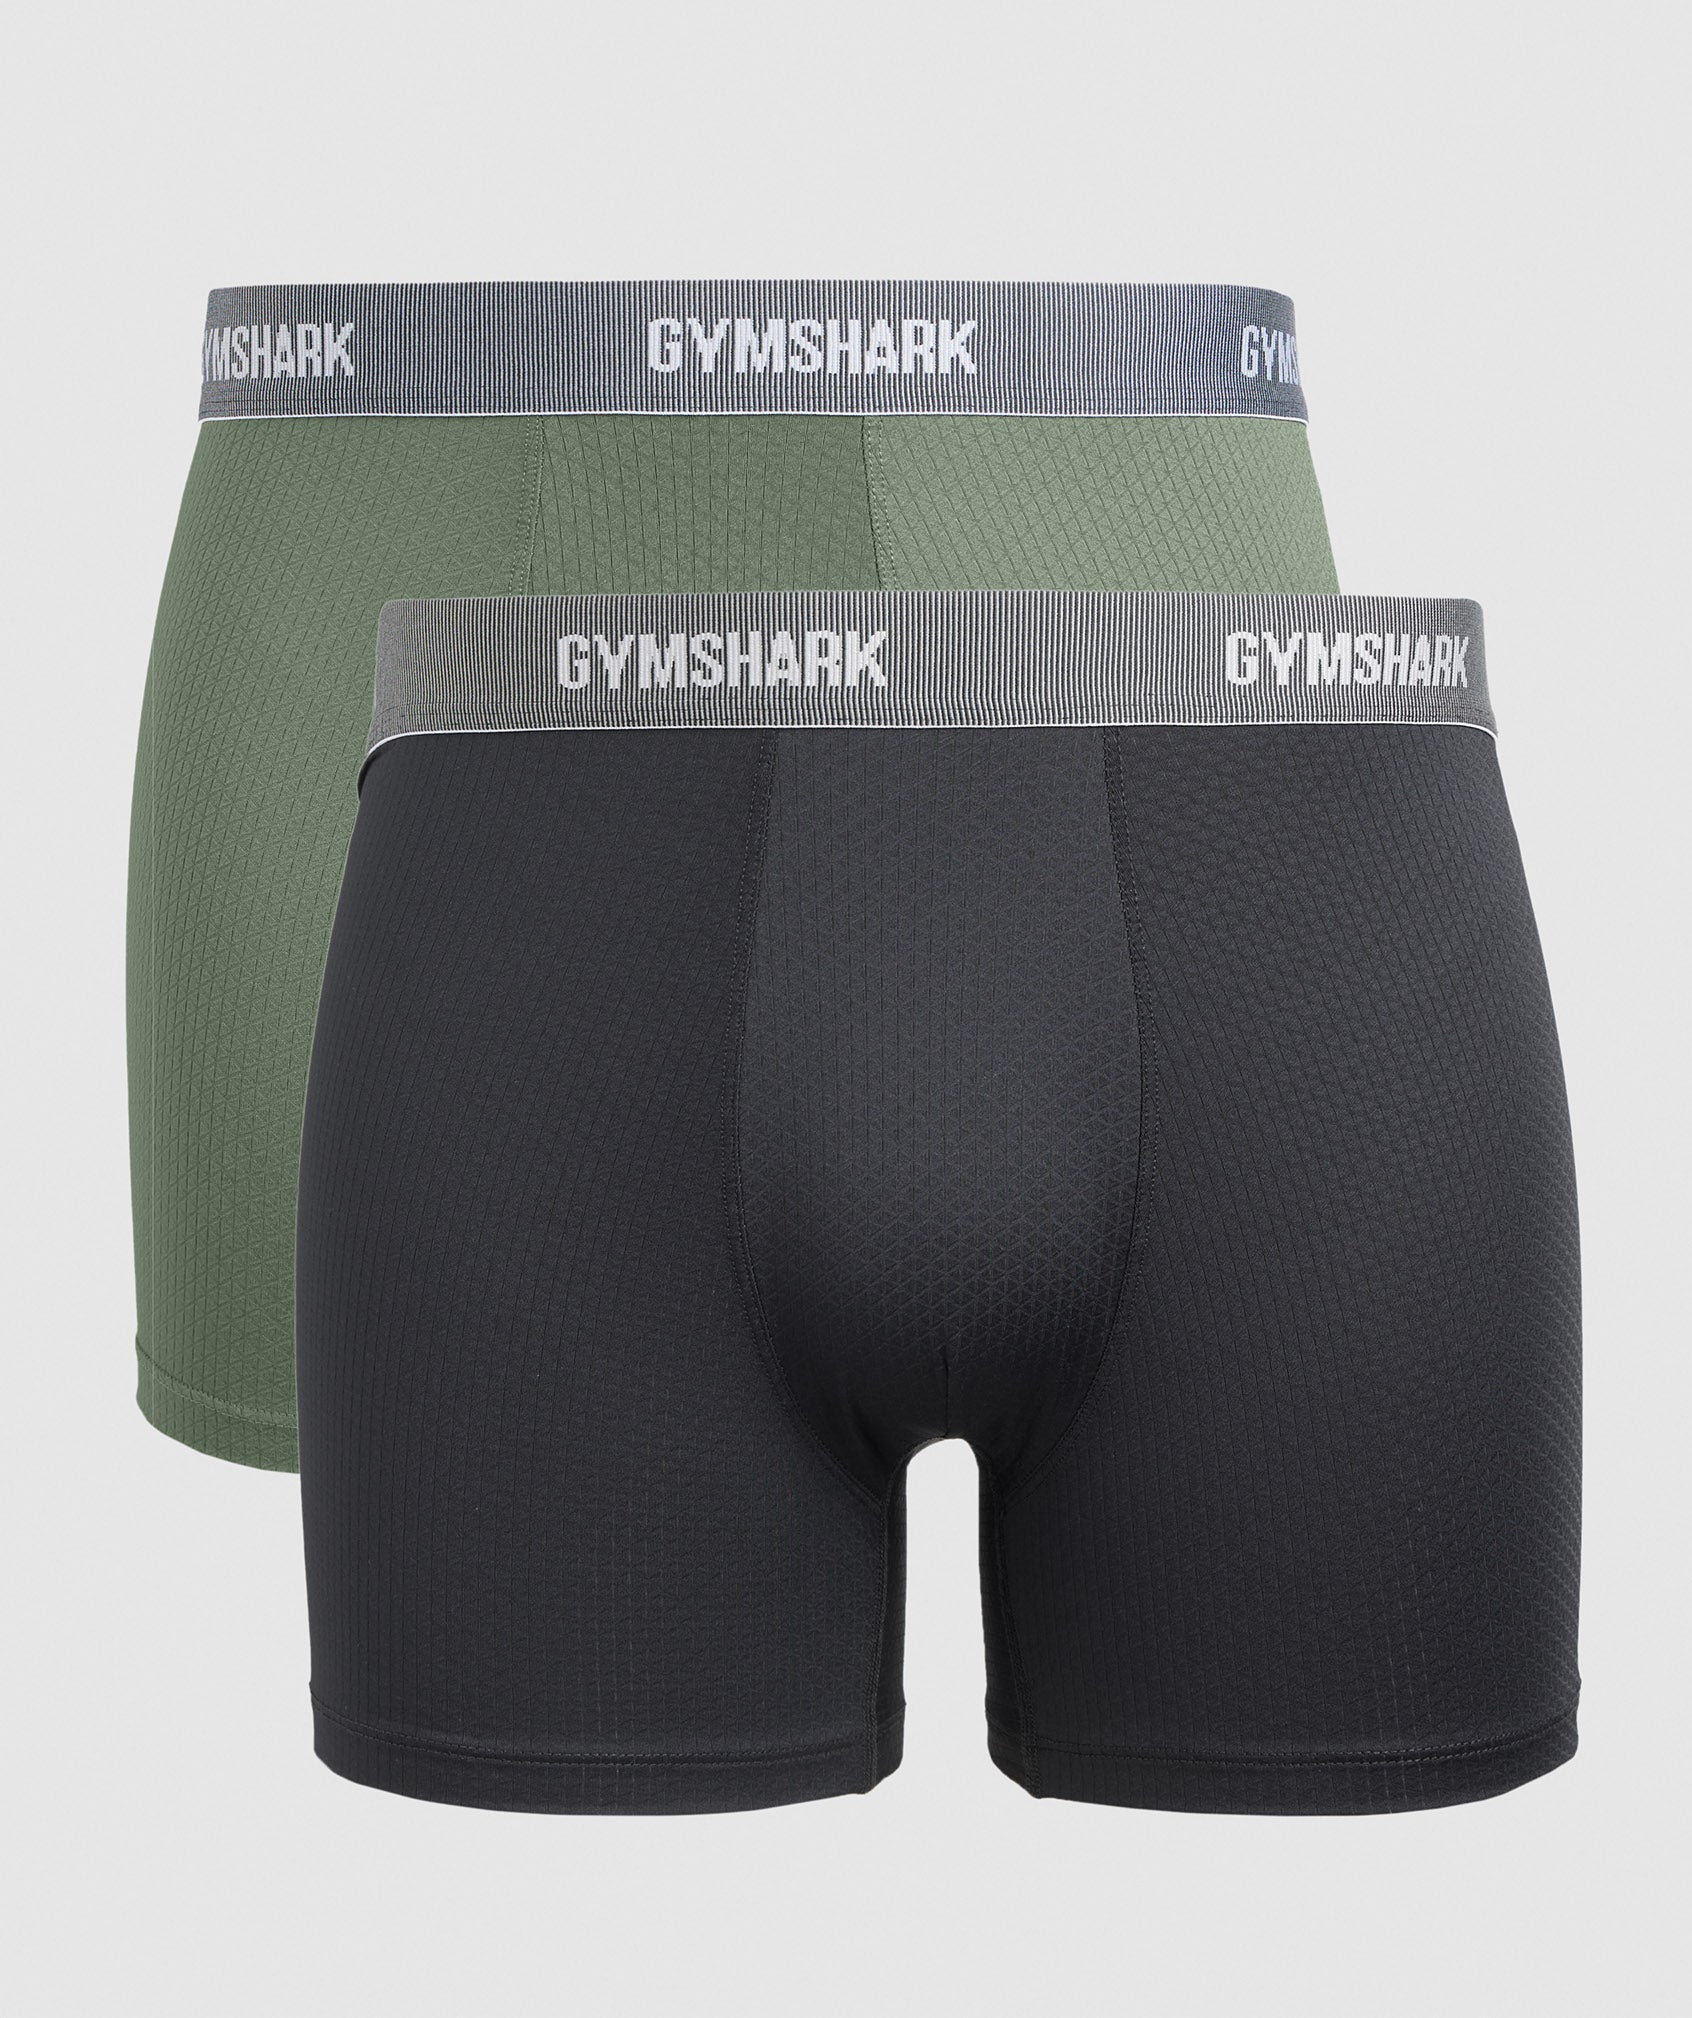 Gymshark, Underwear & Socks